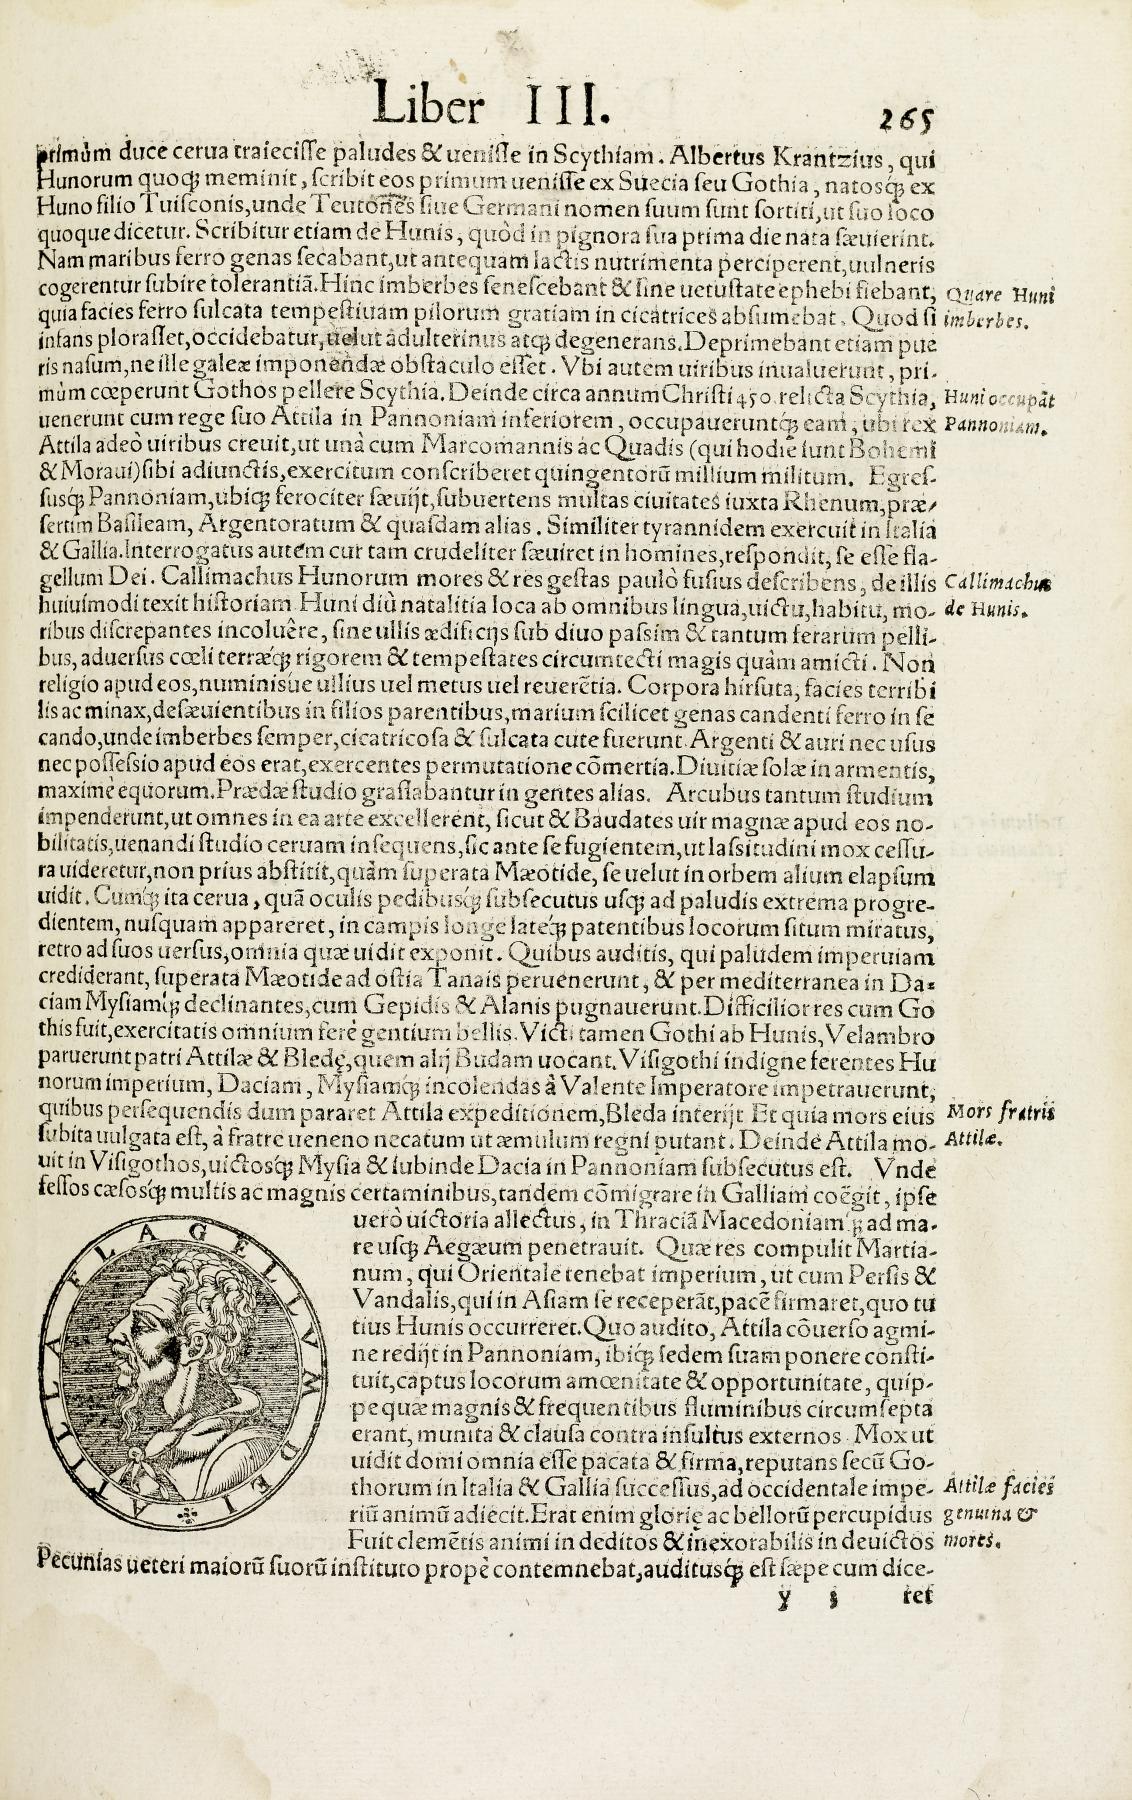 Image for Cosmographia Universalis